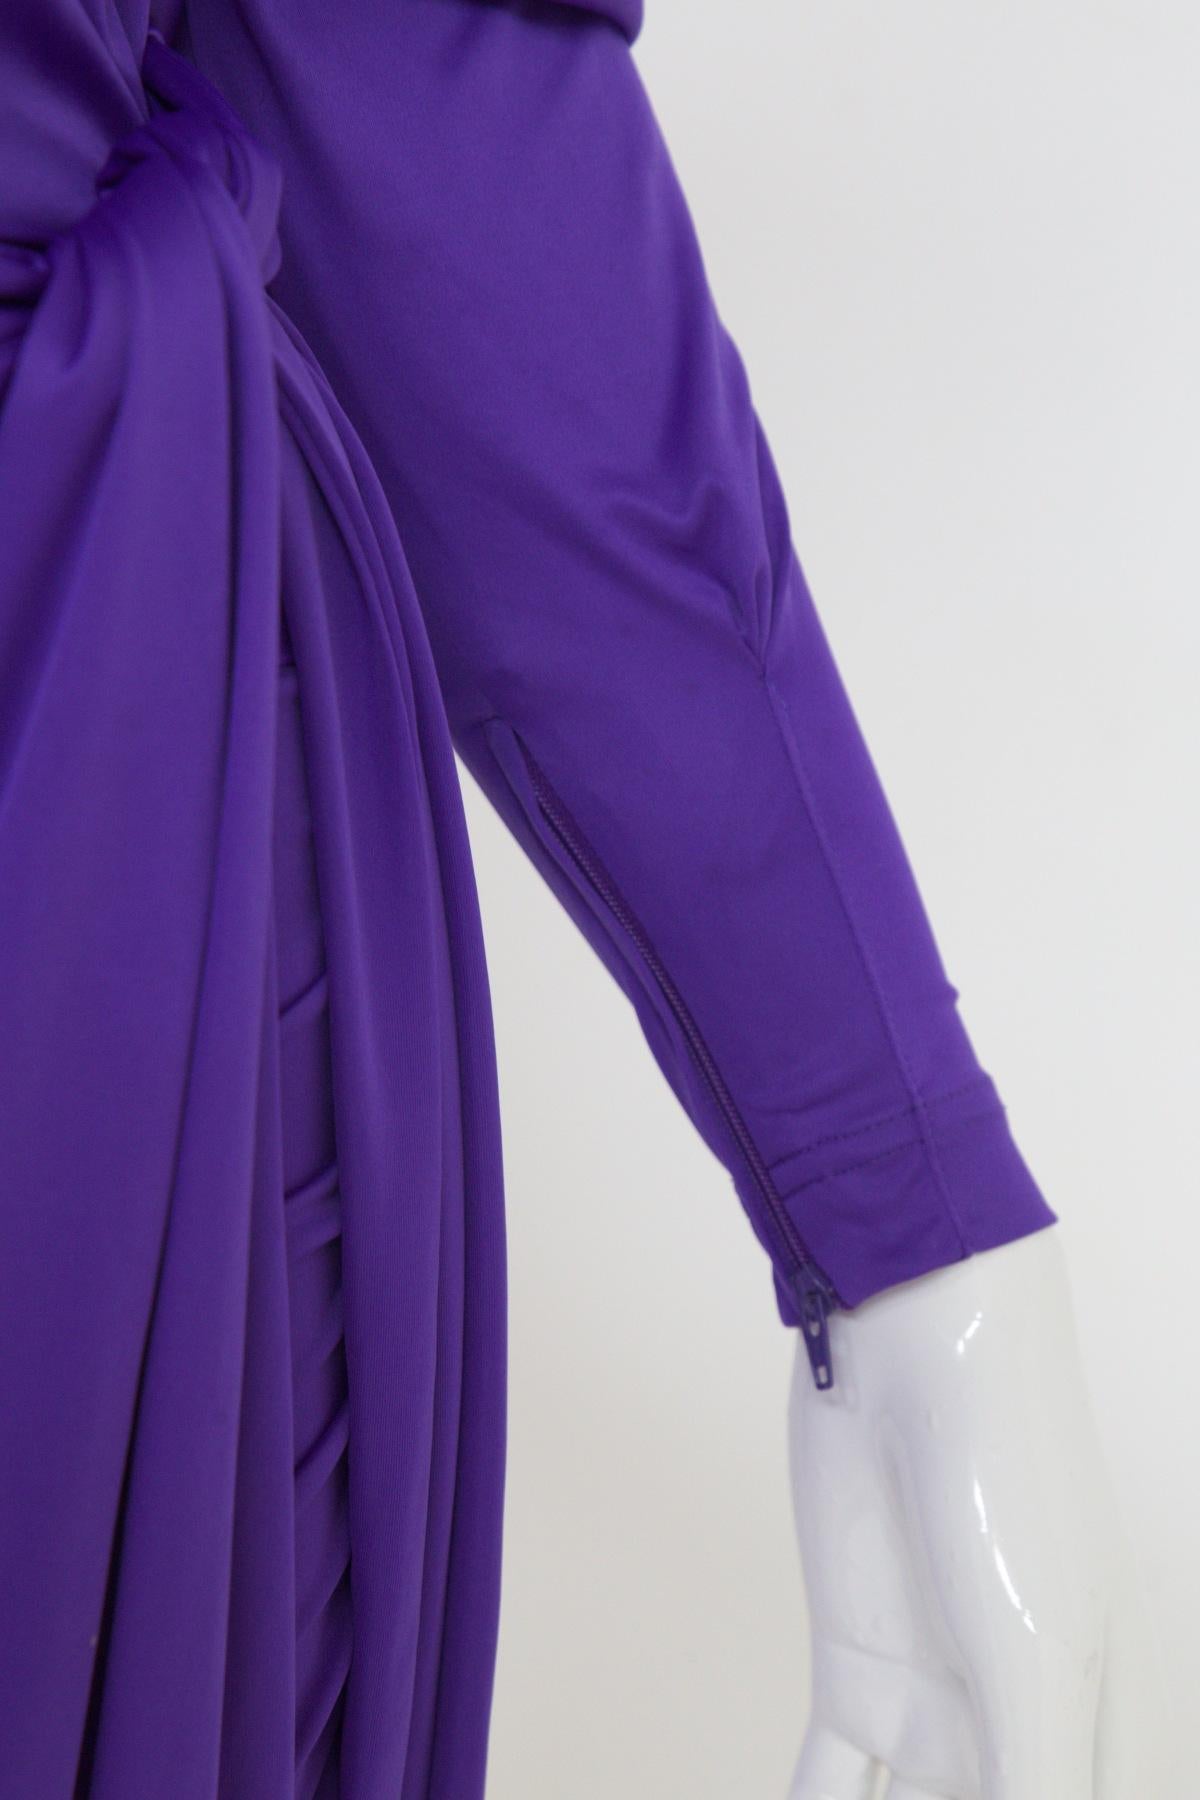 Balenciaga Luxurious Vintage Purple Dress For Sale 10